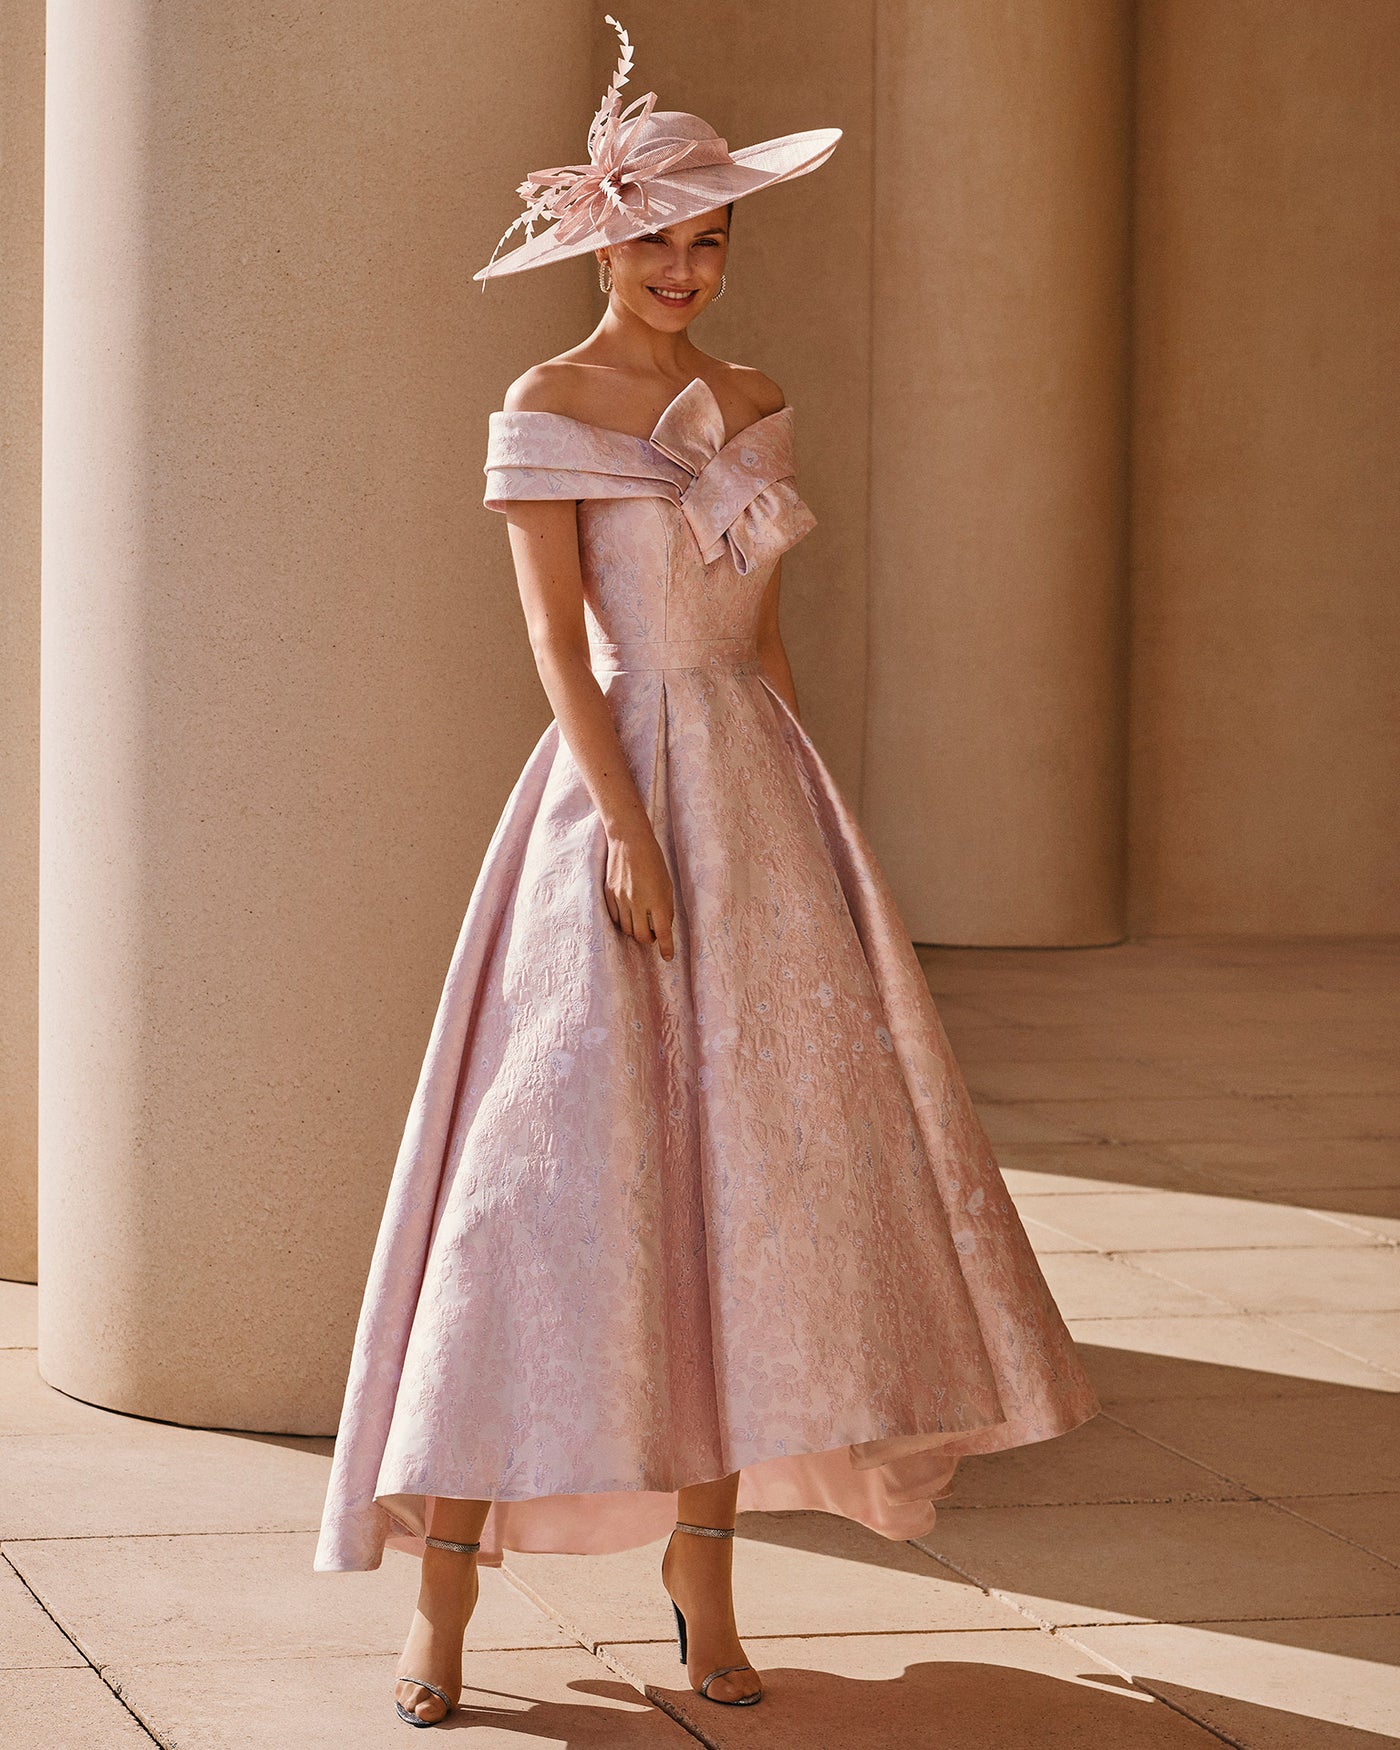 Soft Pink Dress With Floral Design